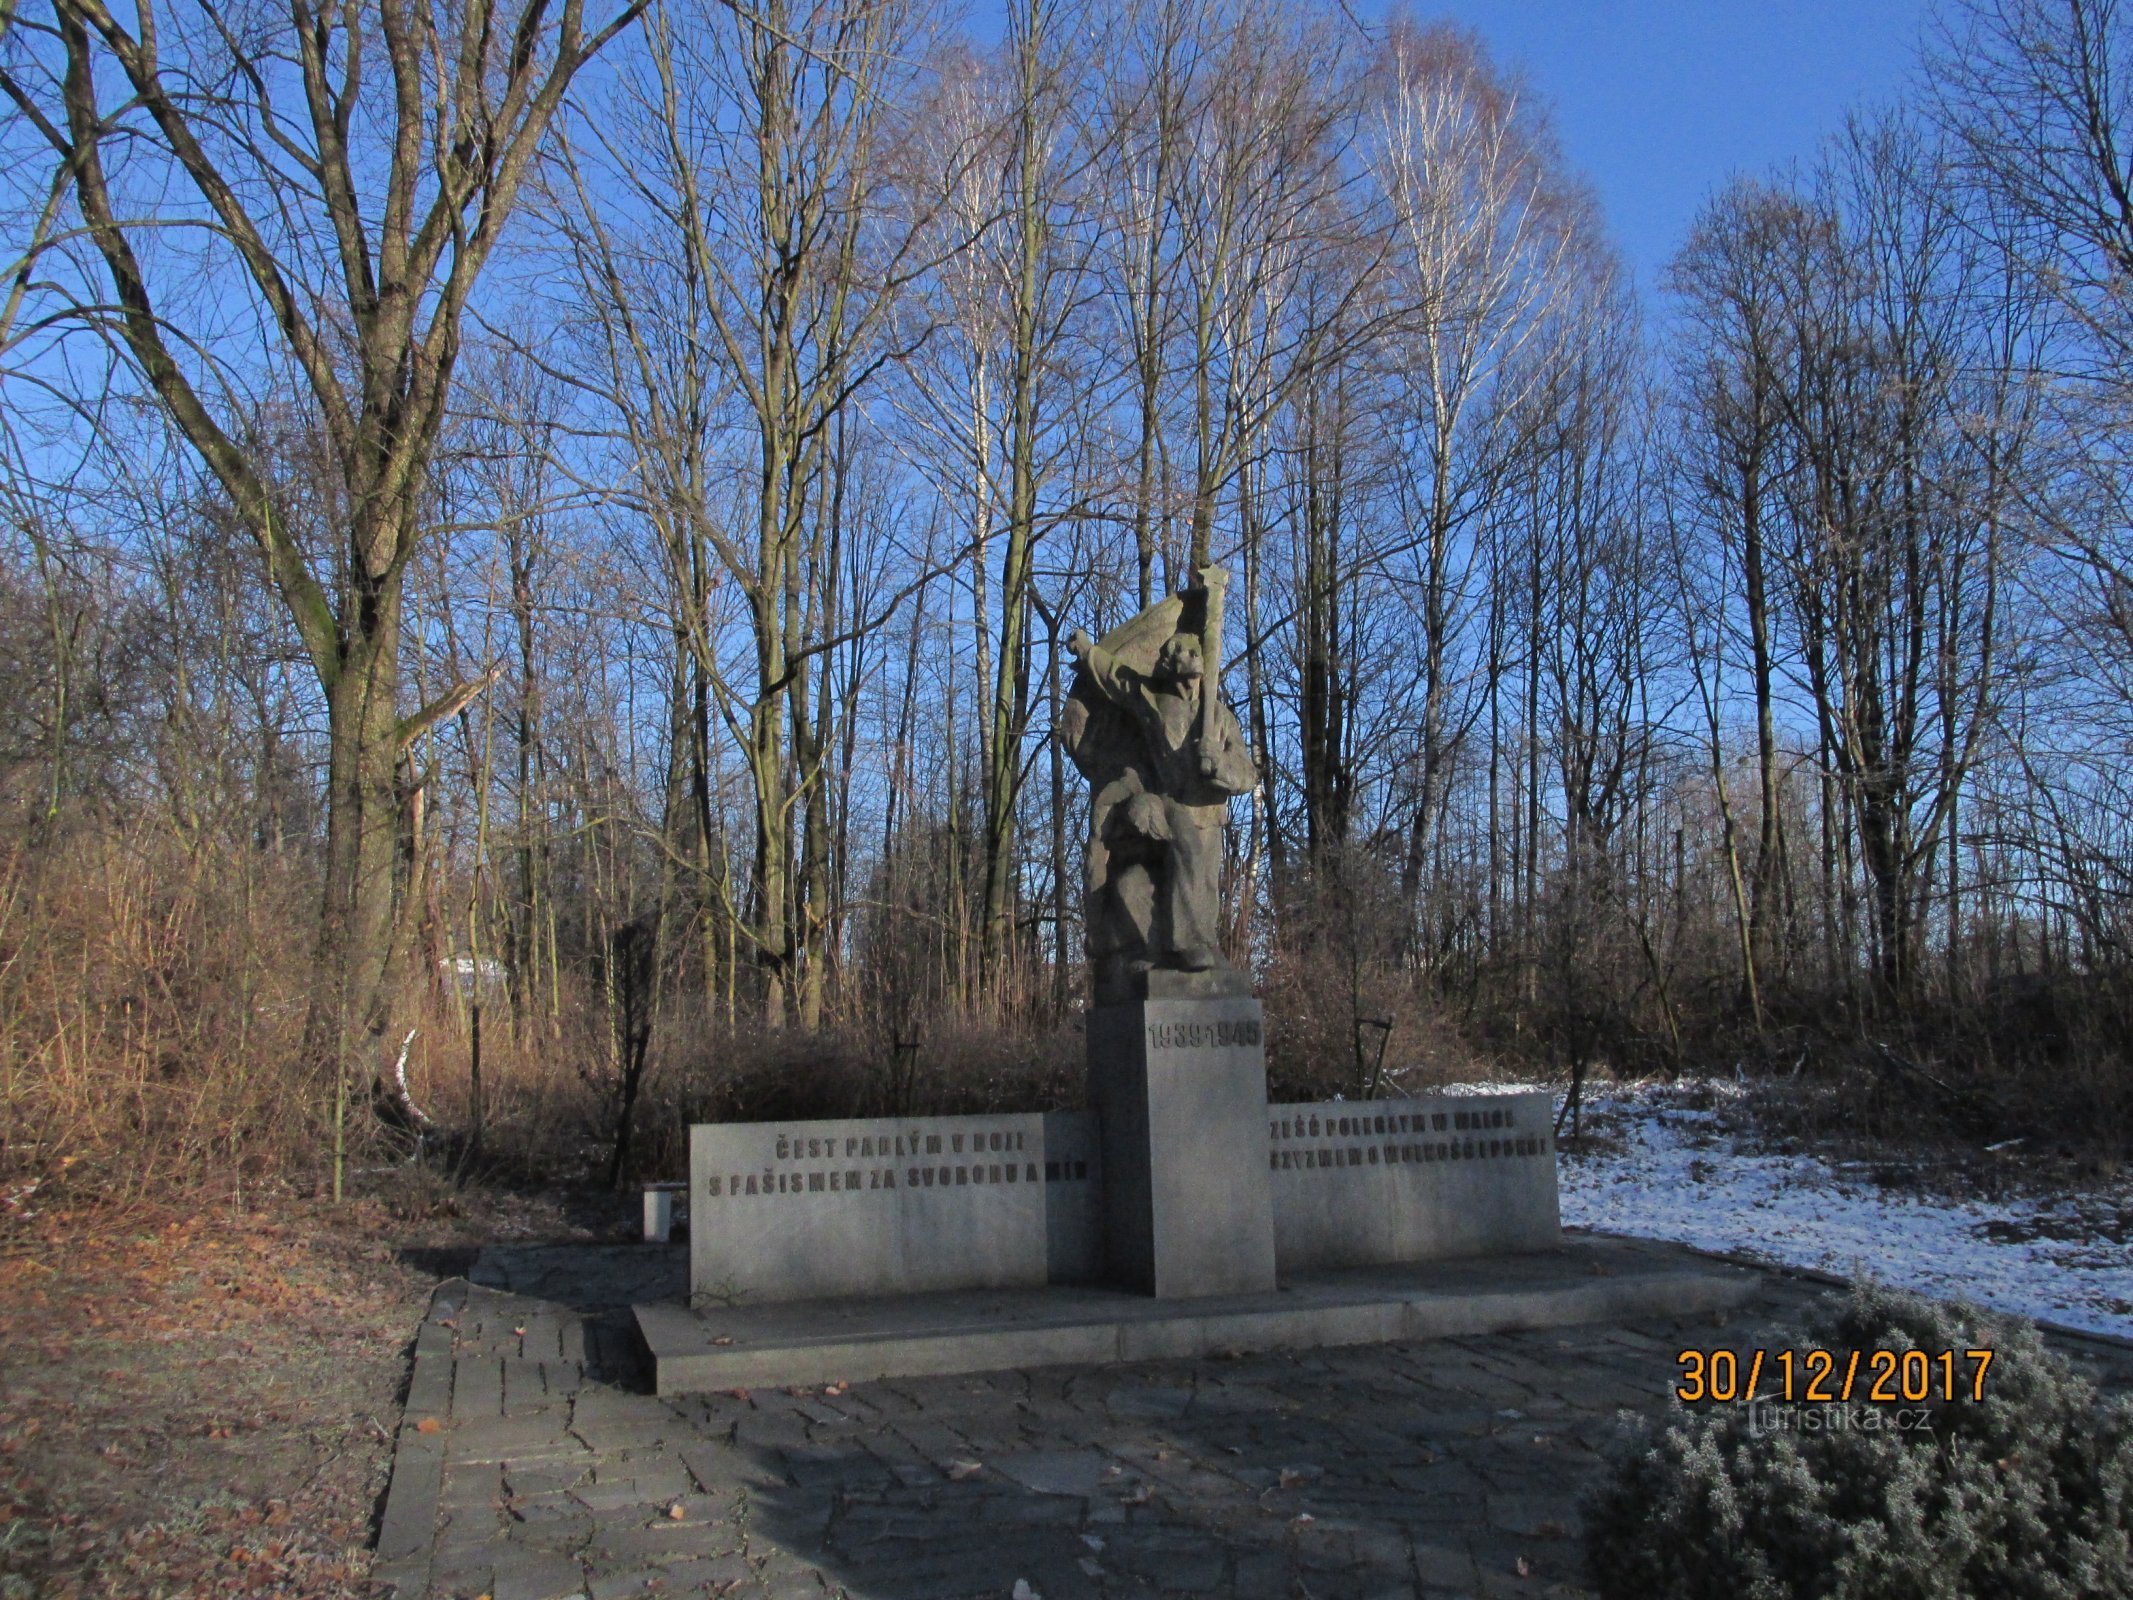 Fasismin Karvinan uhrien muistomerkki Karviná-Dolessa